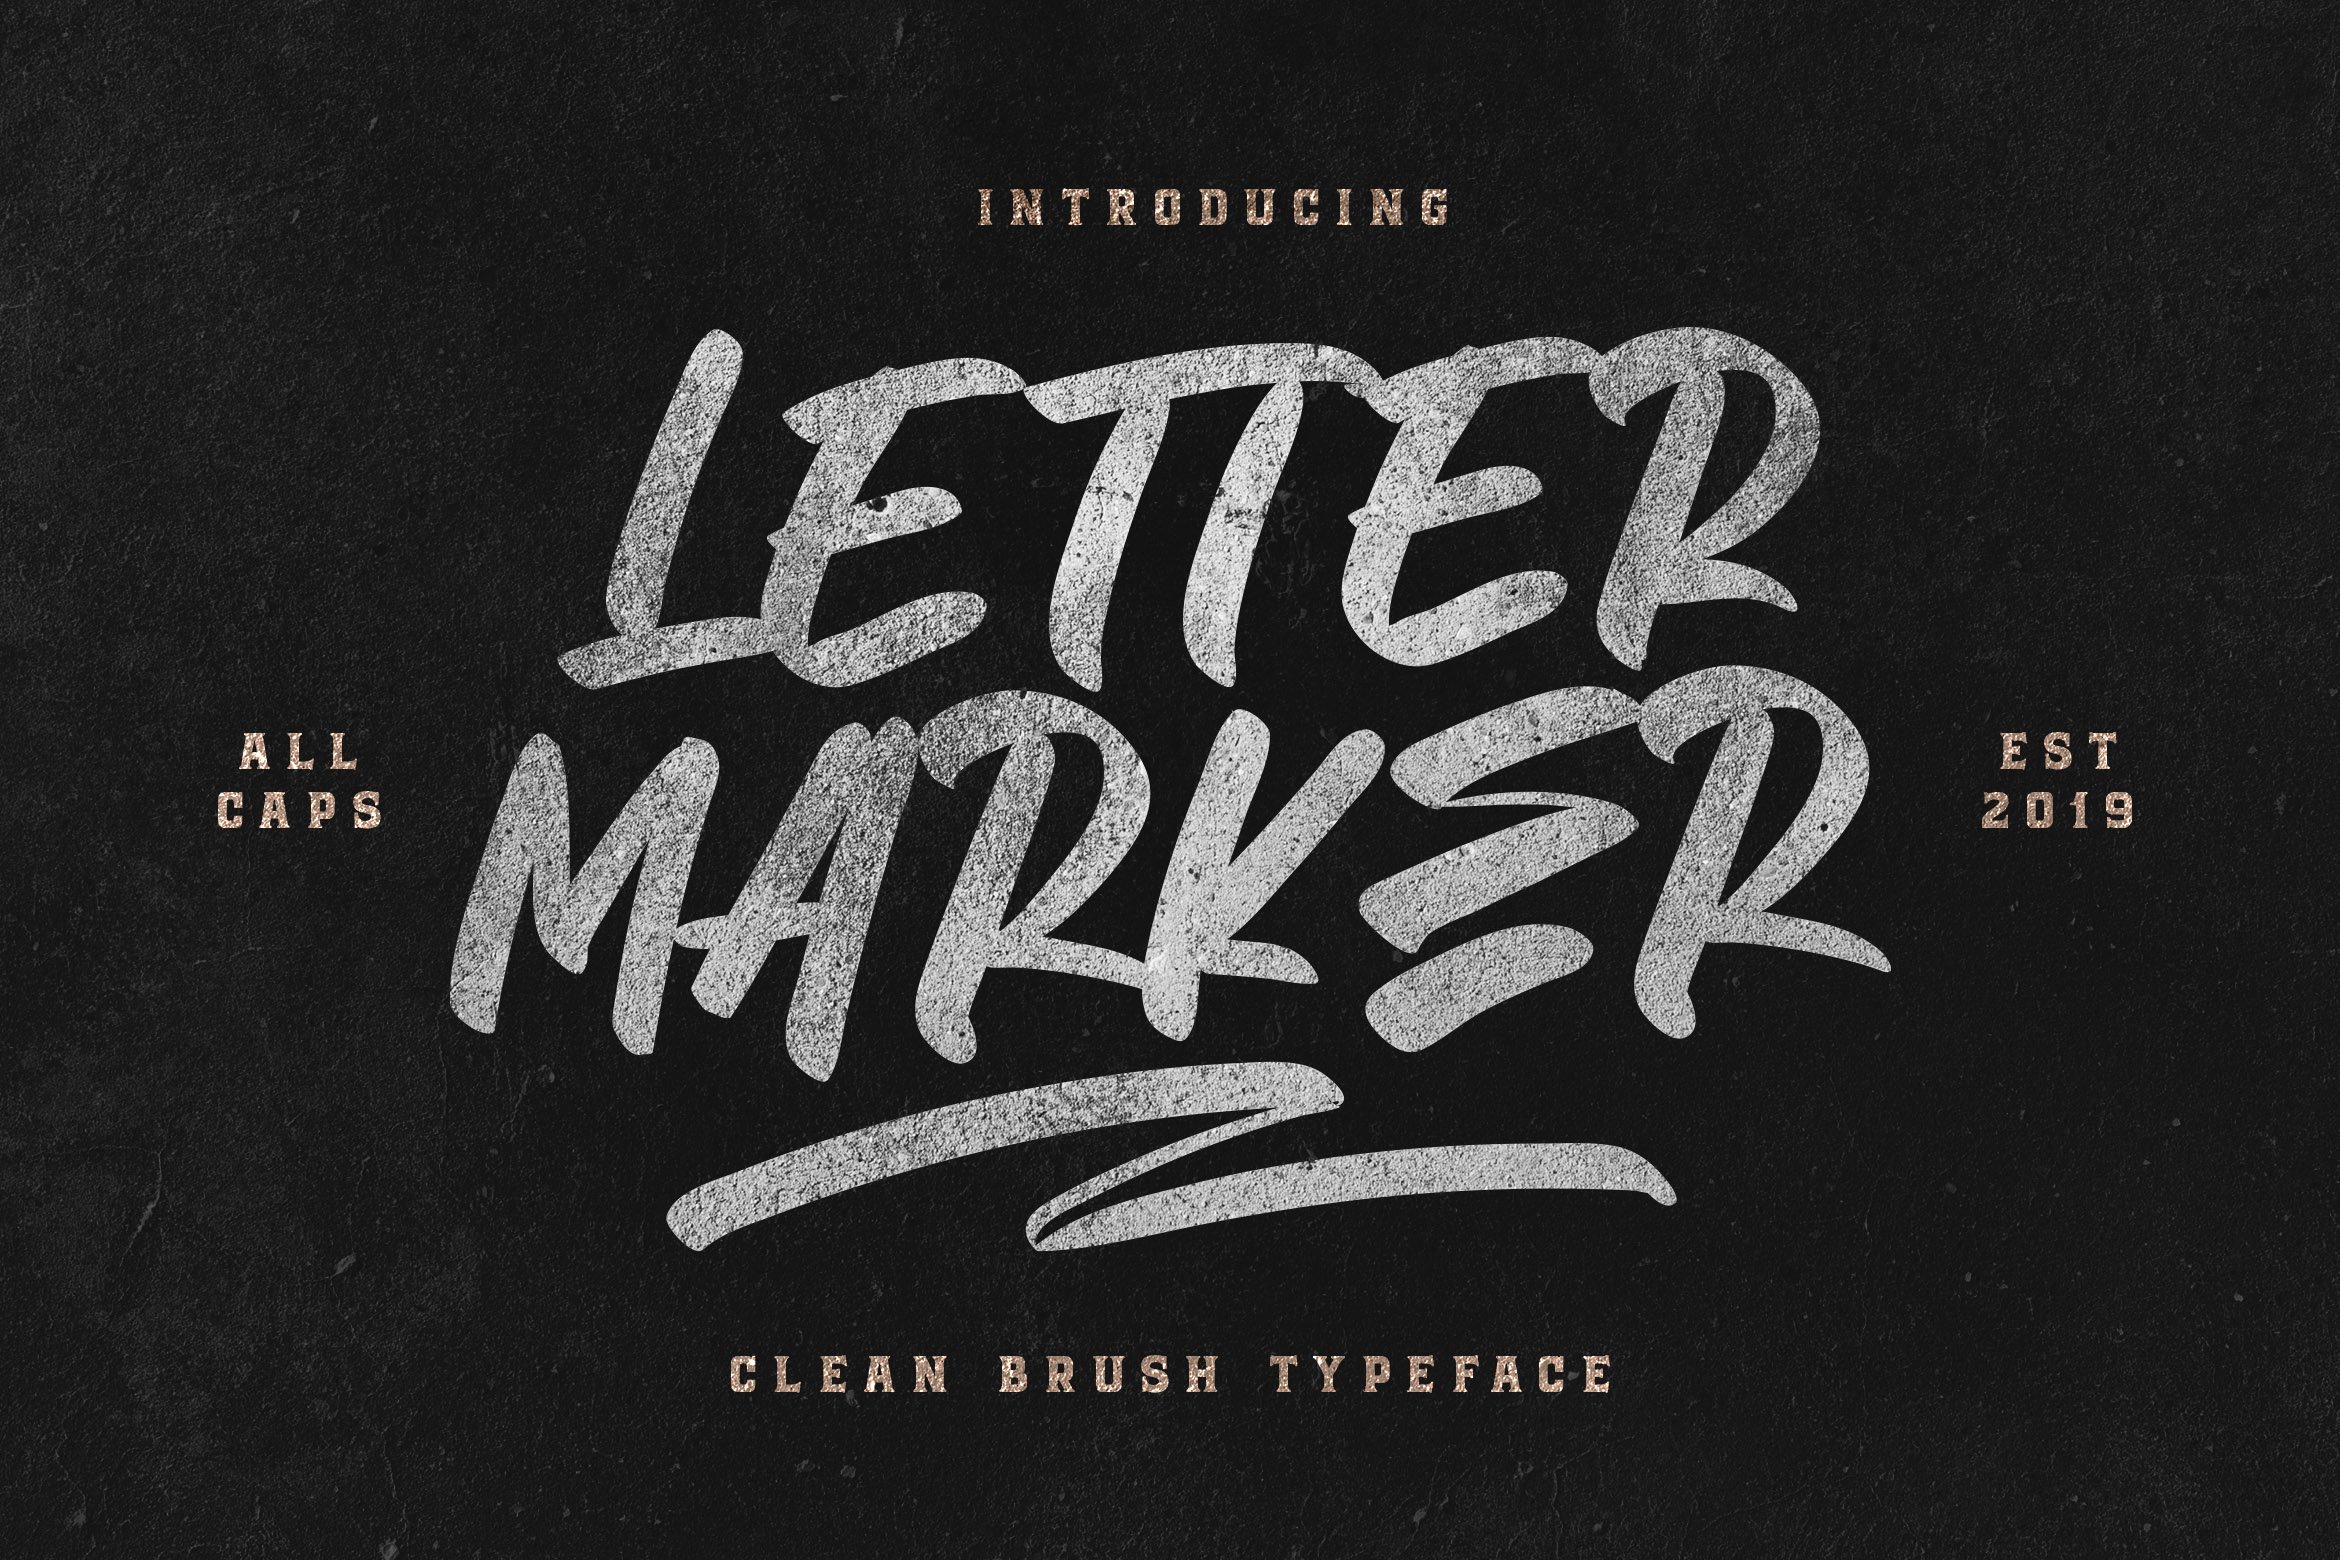 Letter Marker cover image.